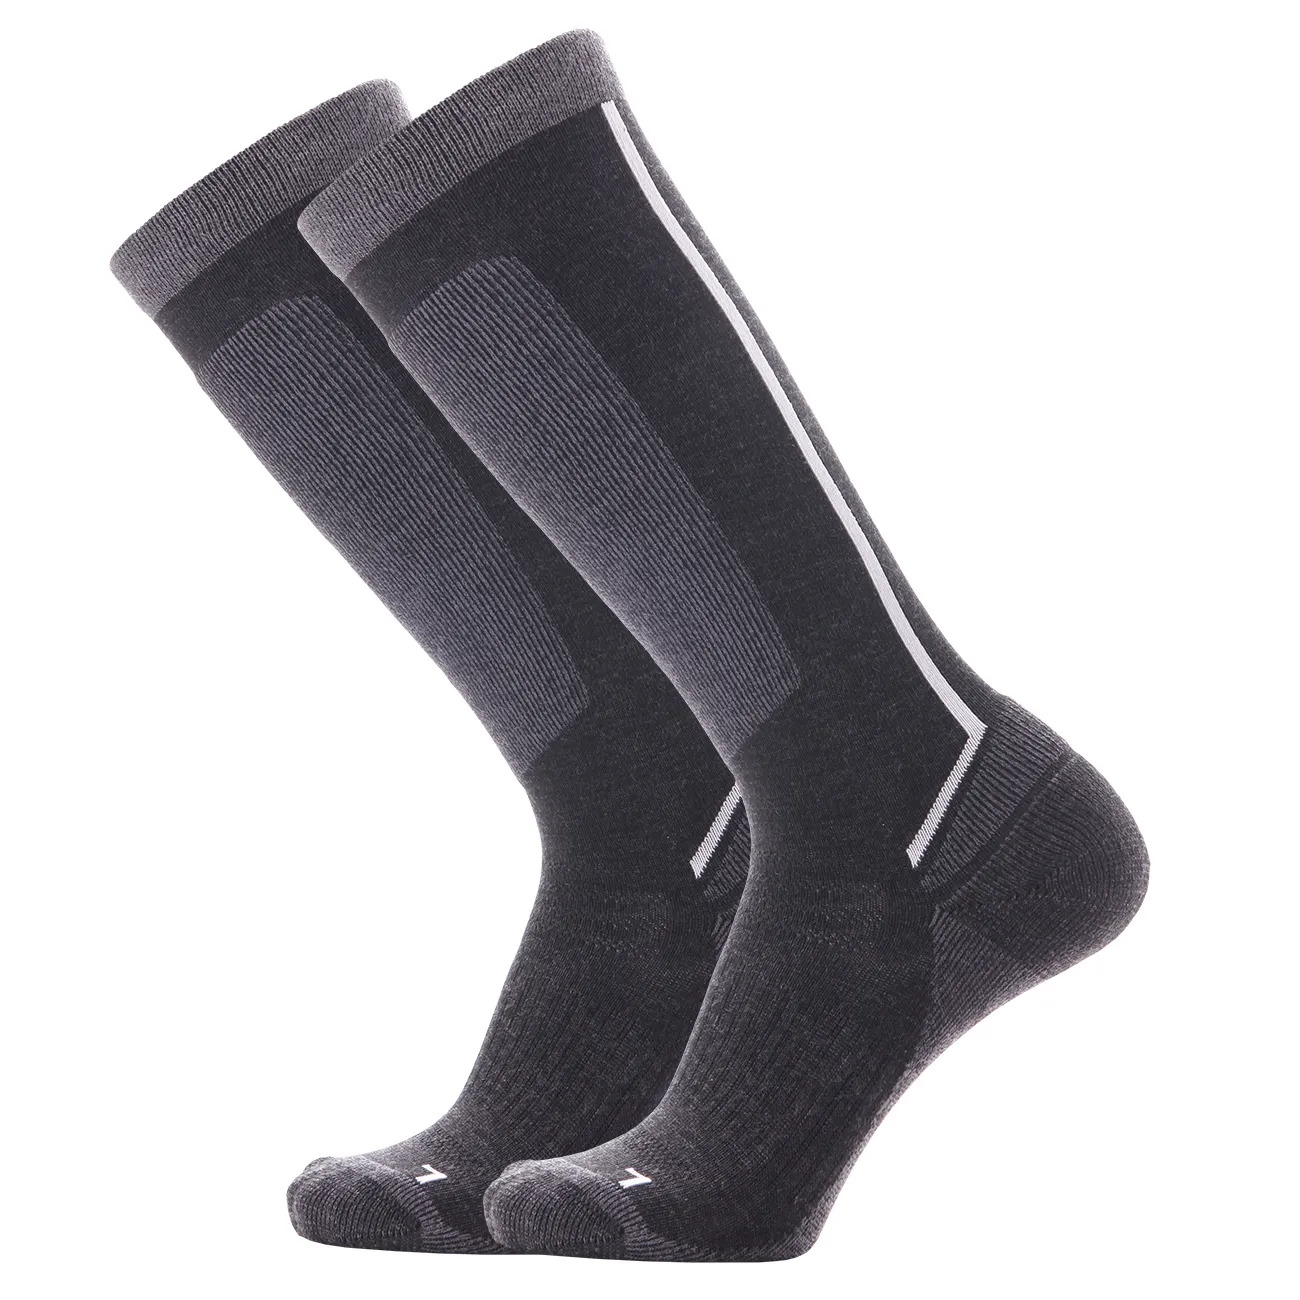 OEM Merino Wool Ski socks Polyester Acrylic Blended Yarn Winter Warm Knee High sports Socks Unisex